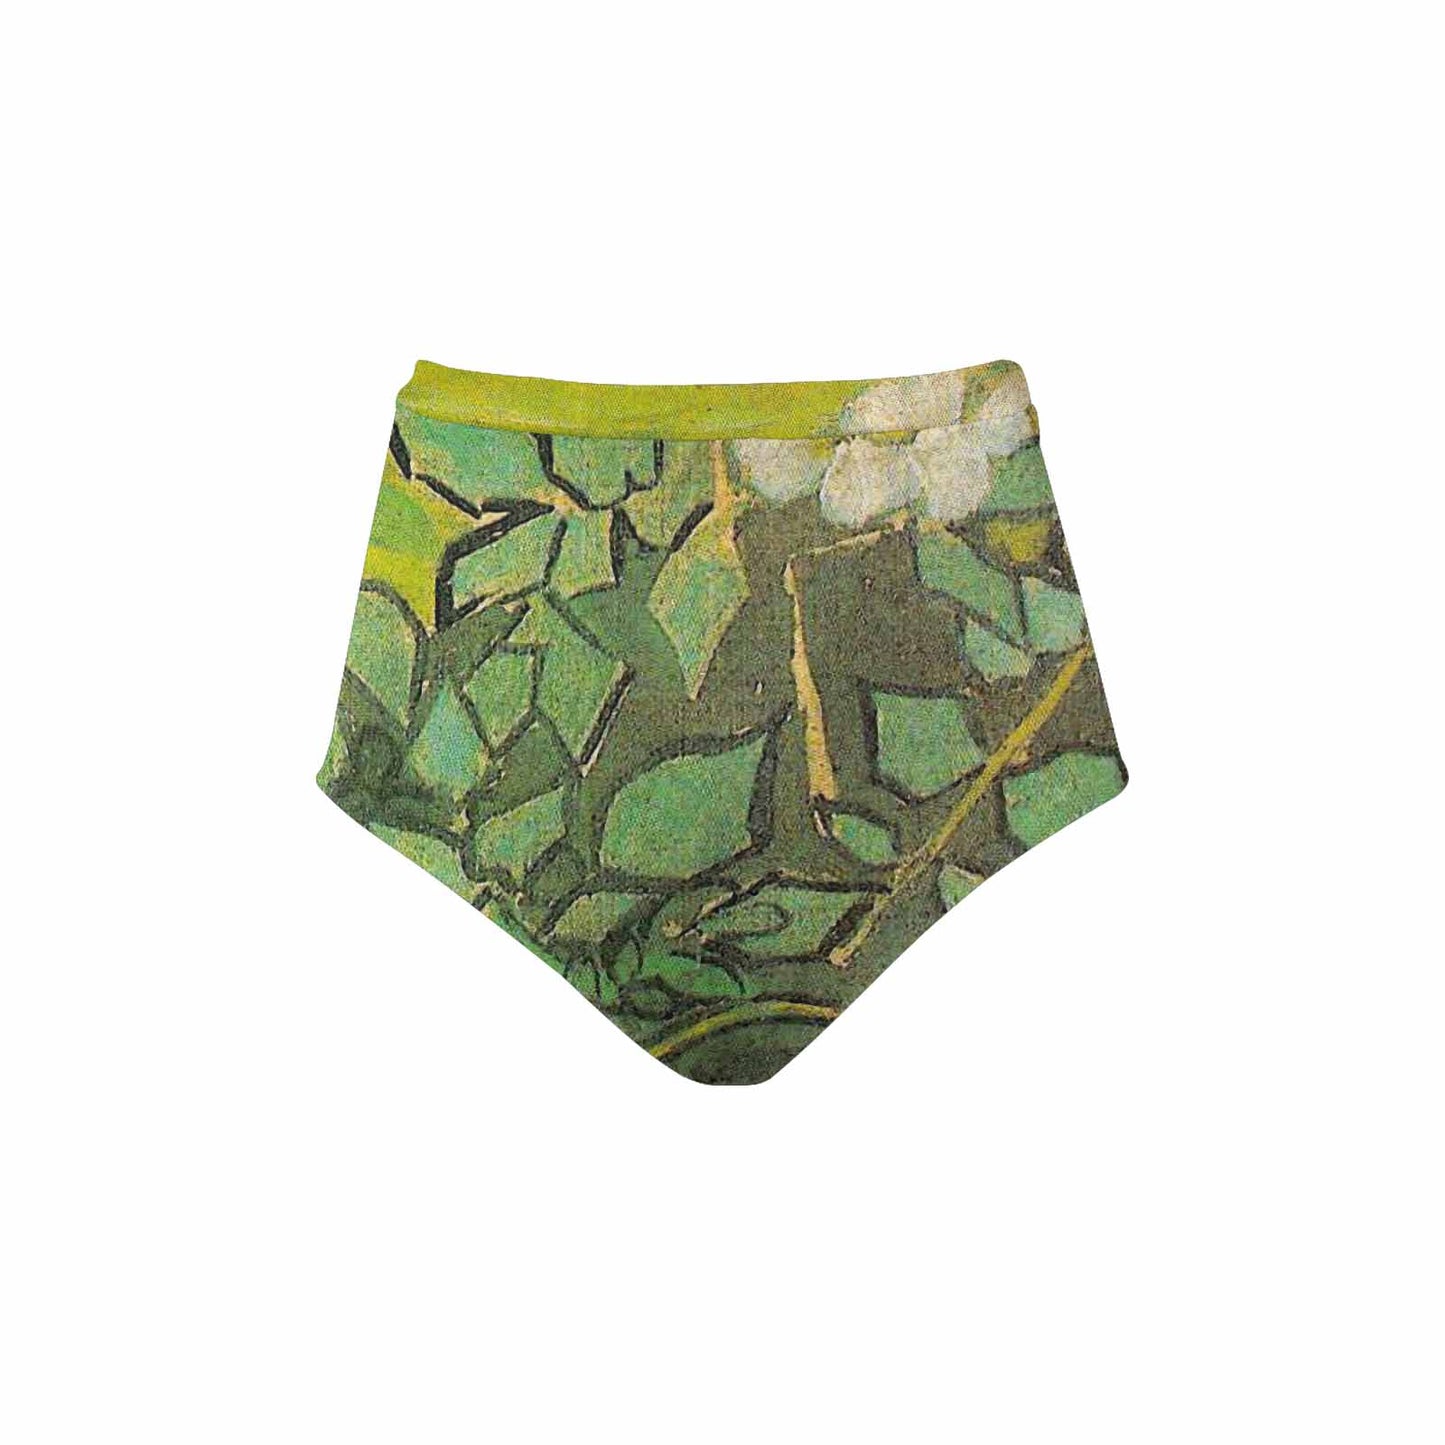 Vintage floral High waist bikini bottom, Design 01